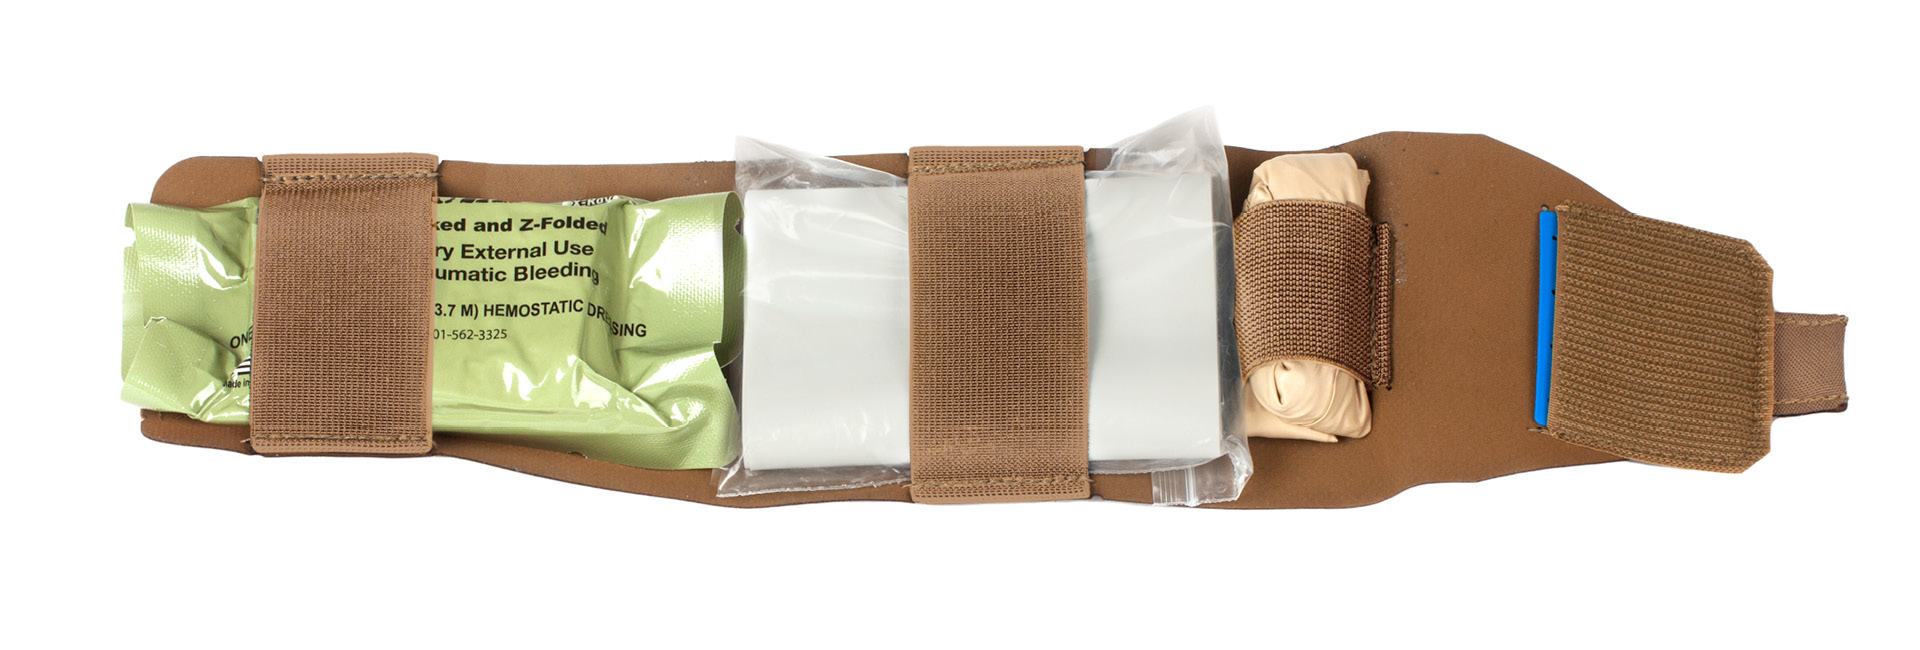 Nano Medic Kit trauma supplies in pouch